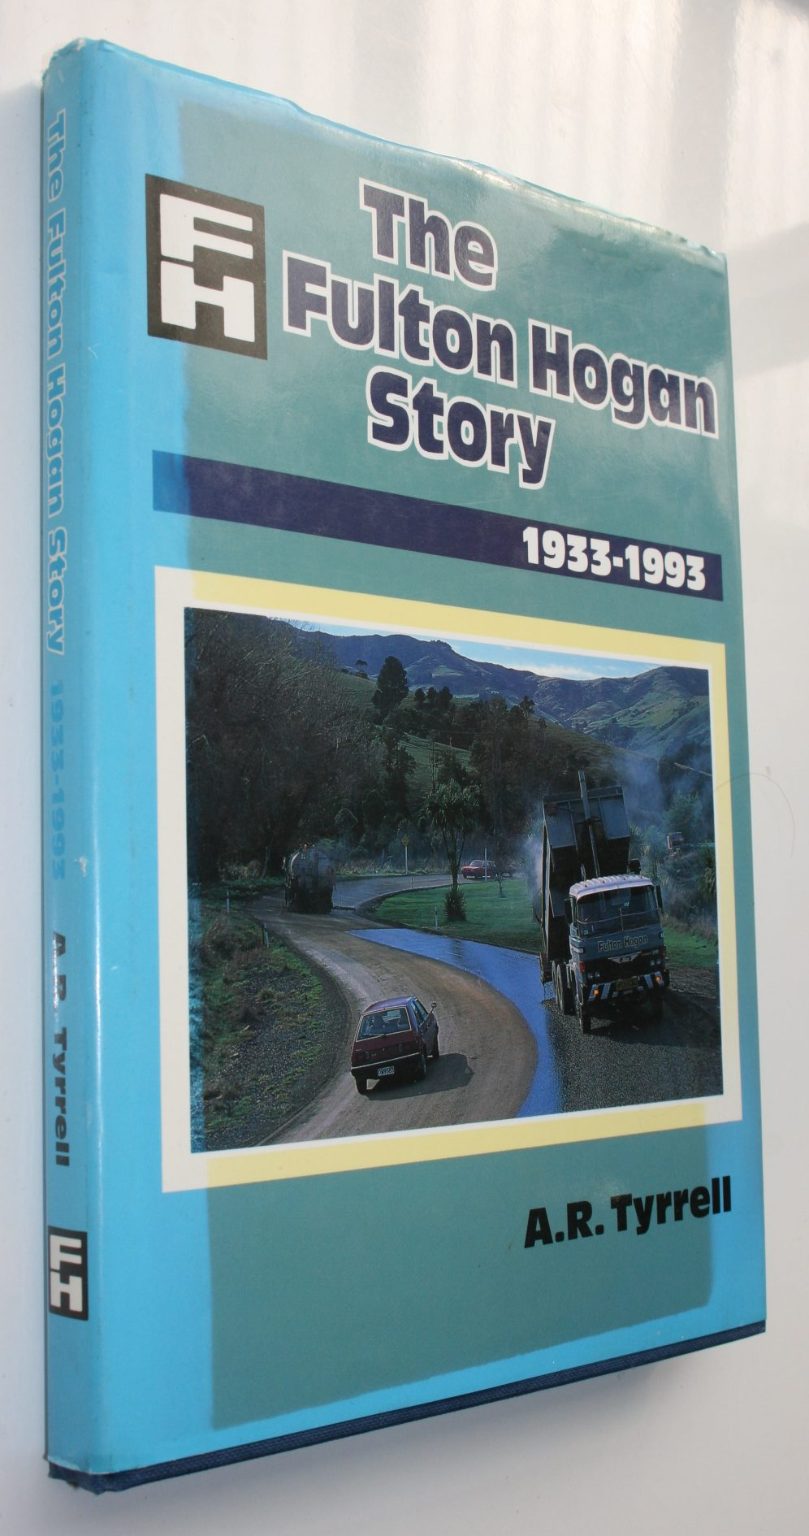 The Fulton Hogan Story 1933-1993 by A. R. Tyrrell.  FIRST EDITION. SCARCE.